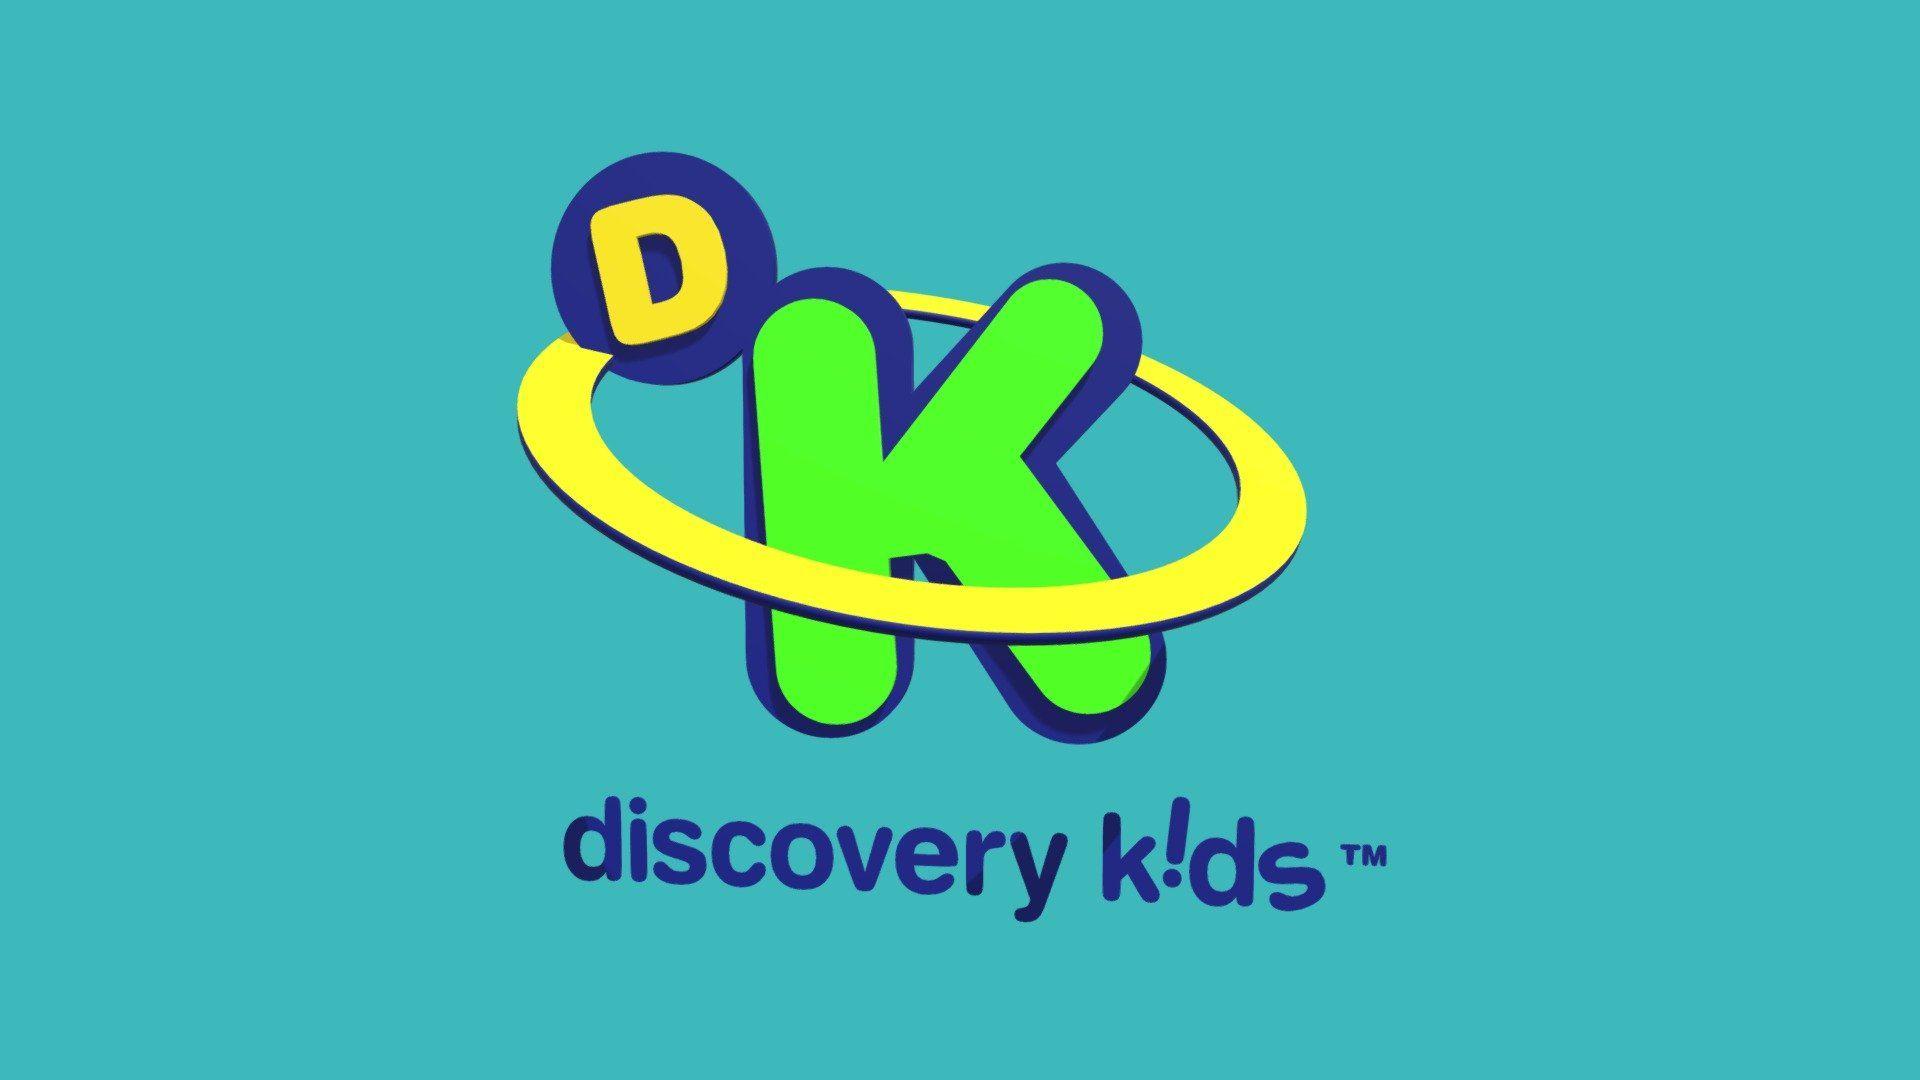 Discovery Kids Logo - Discovery kids logo 2009-2016 ...